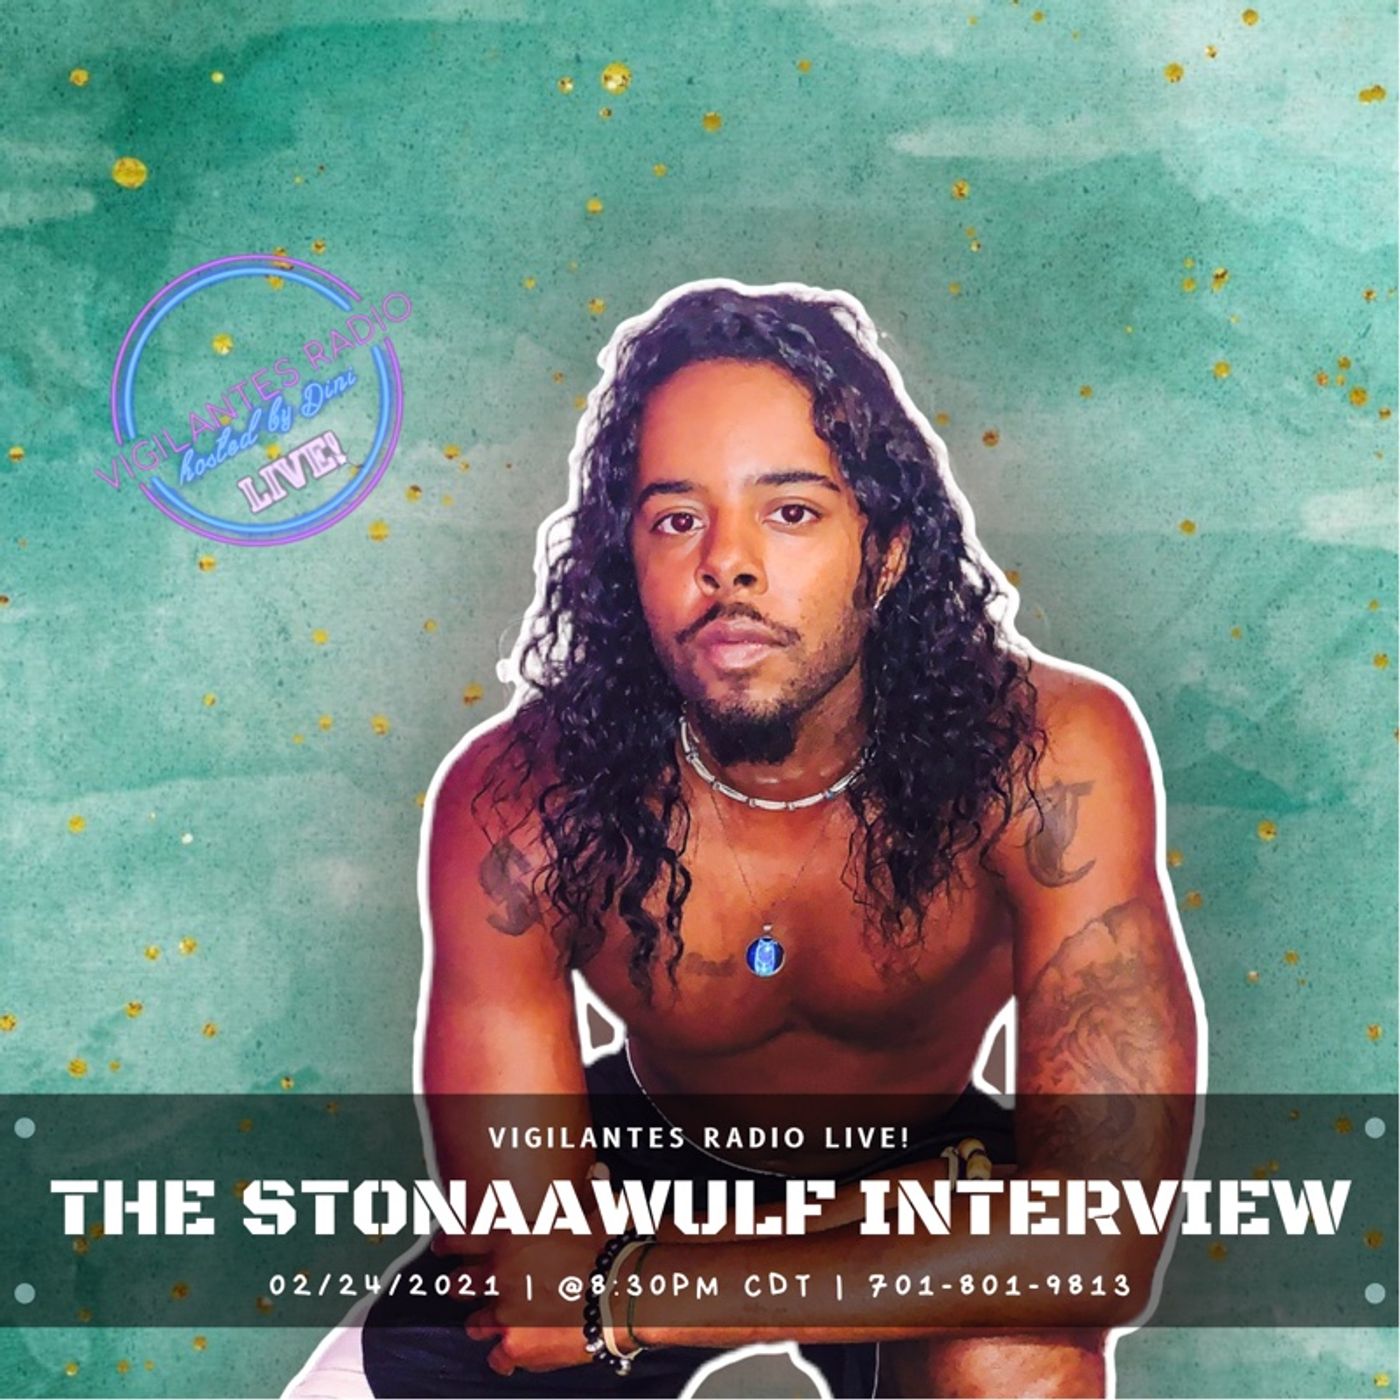 The Stonaawulf Interview. Image